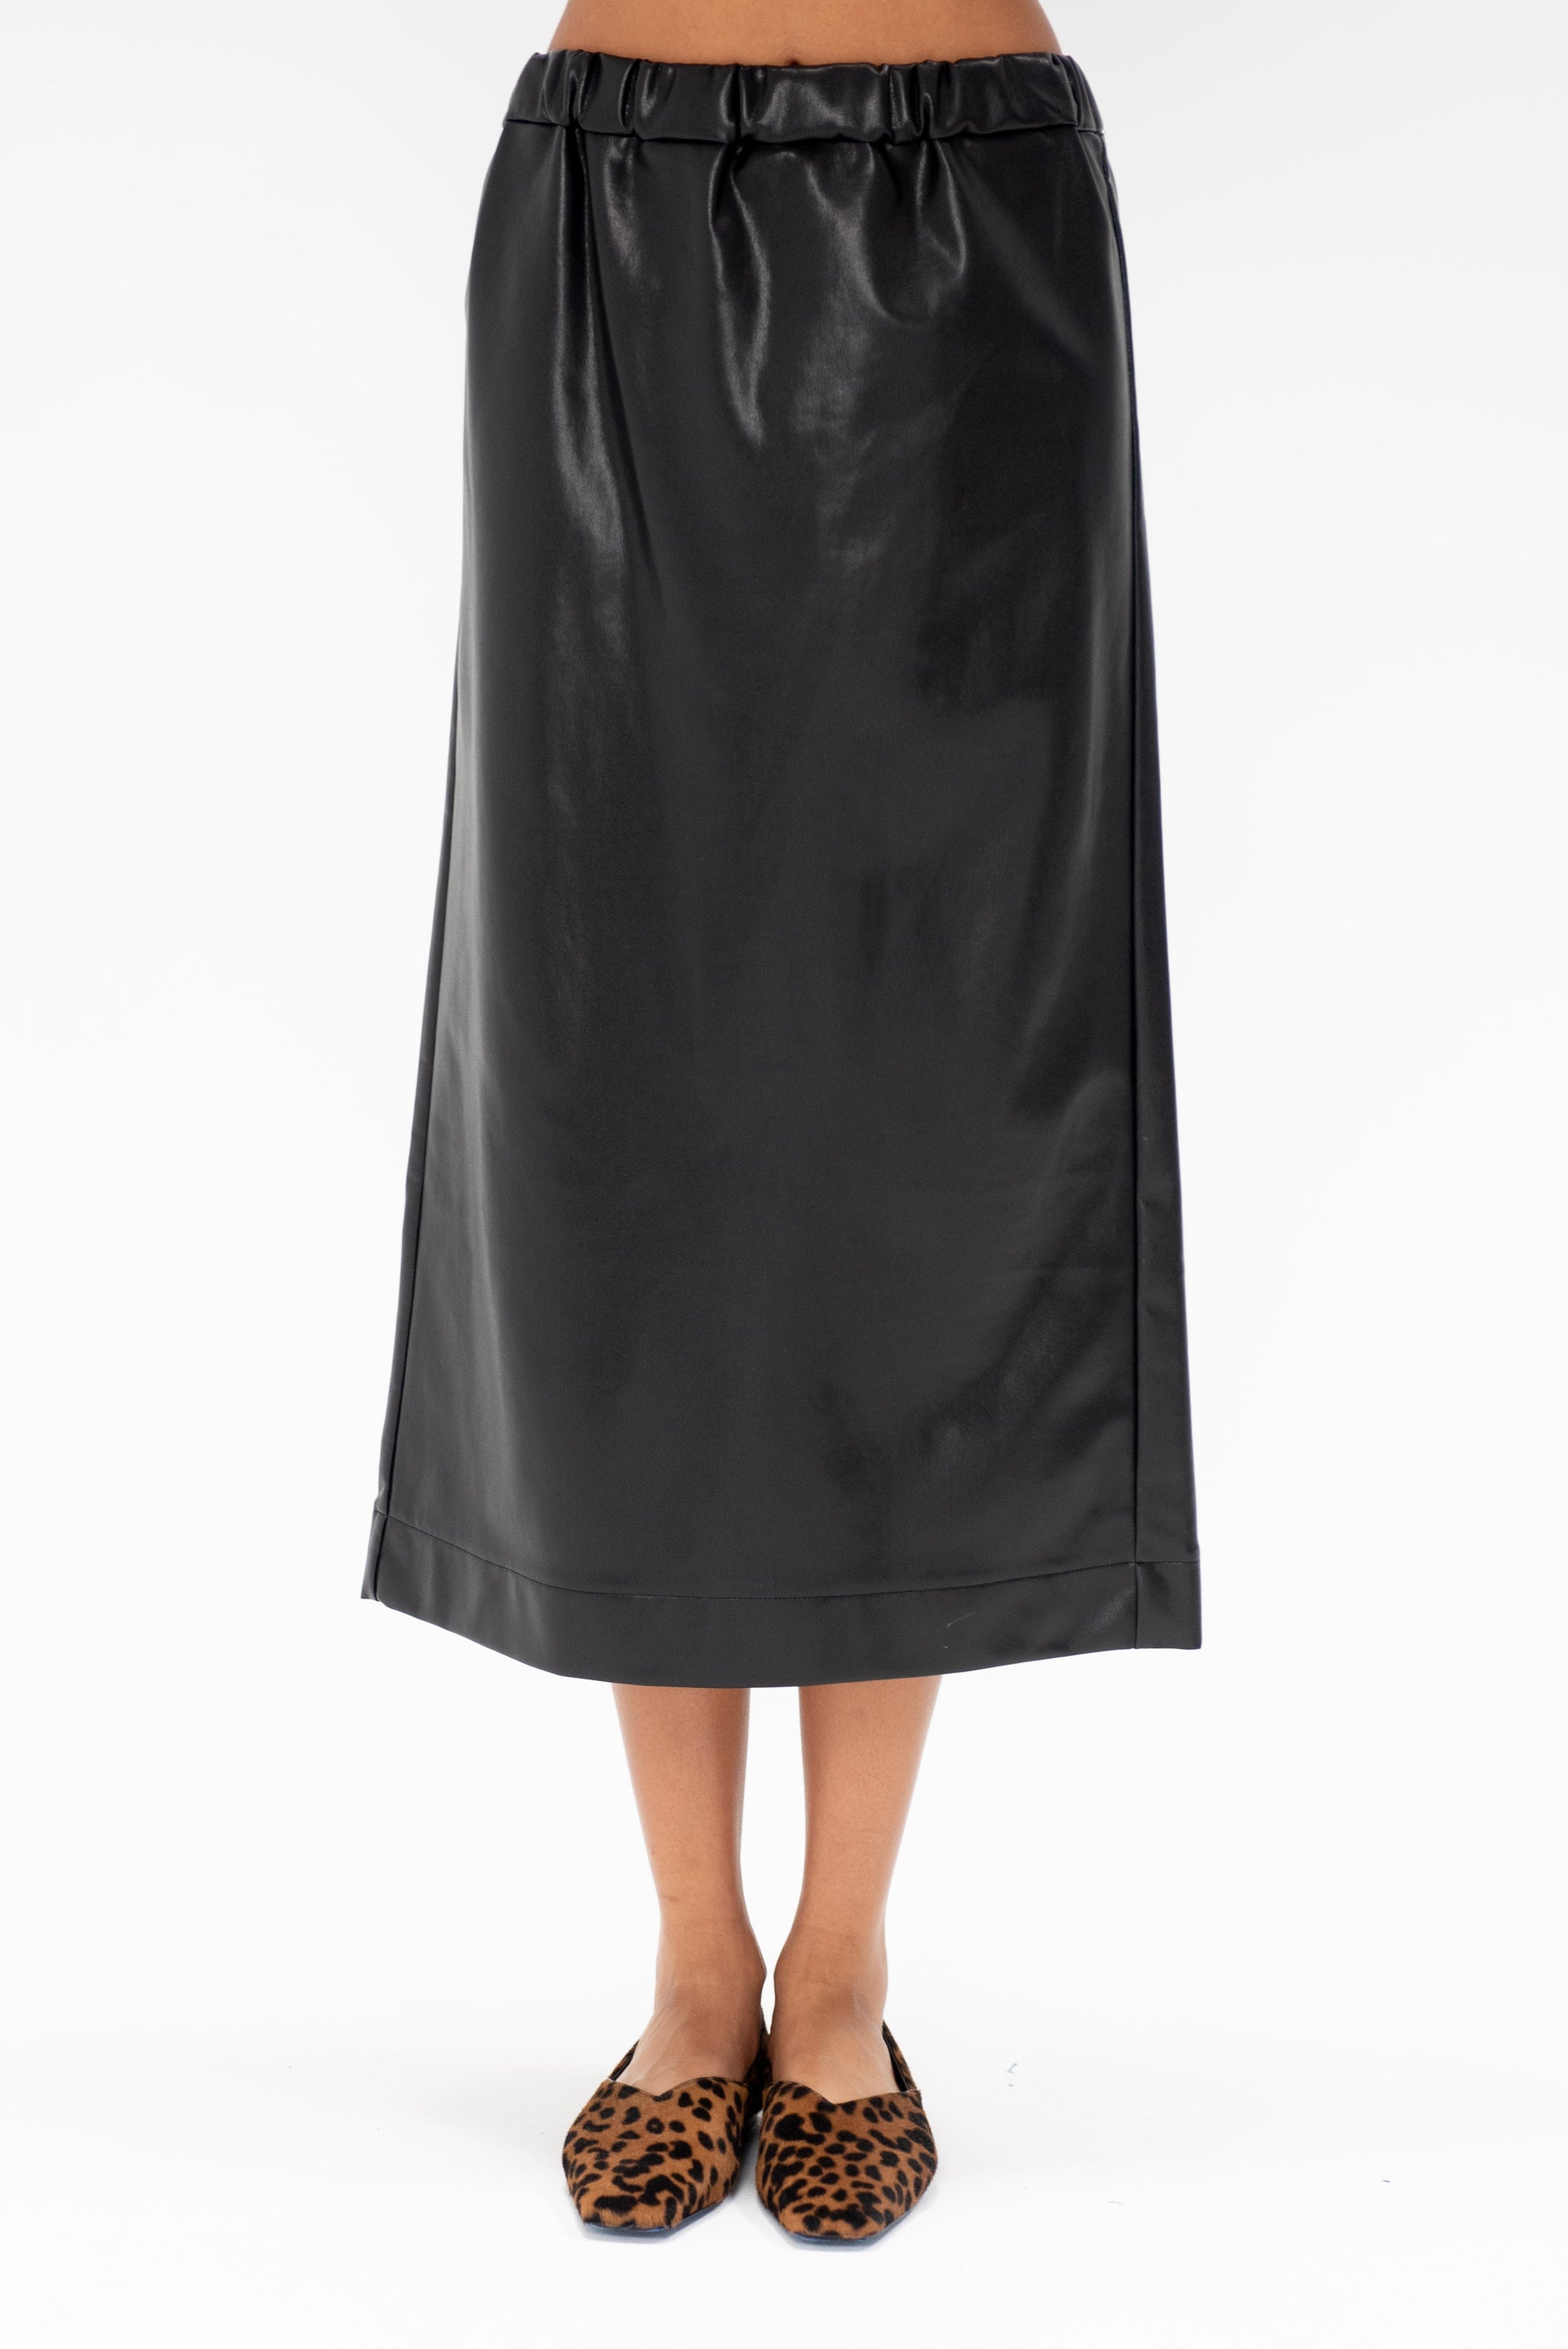 GAUCHERE - Skirt, Black